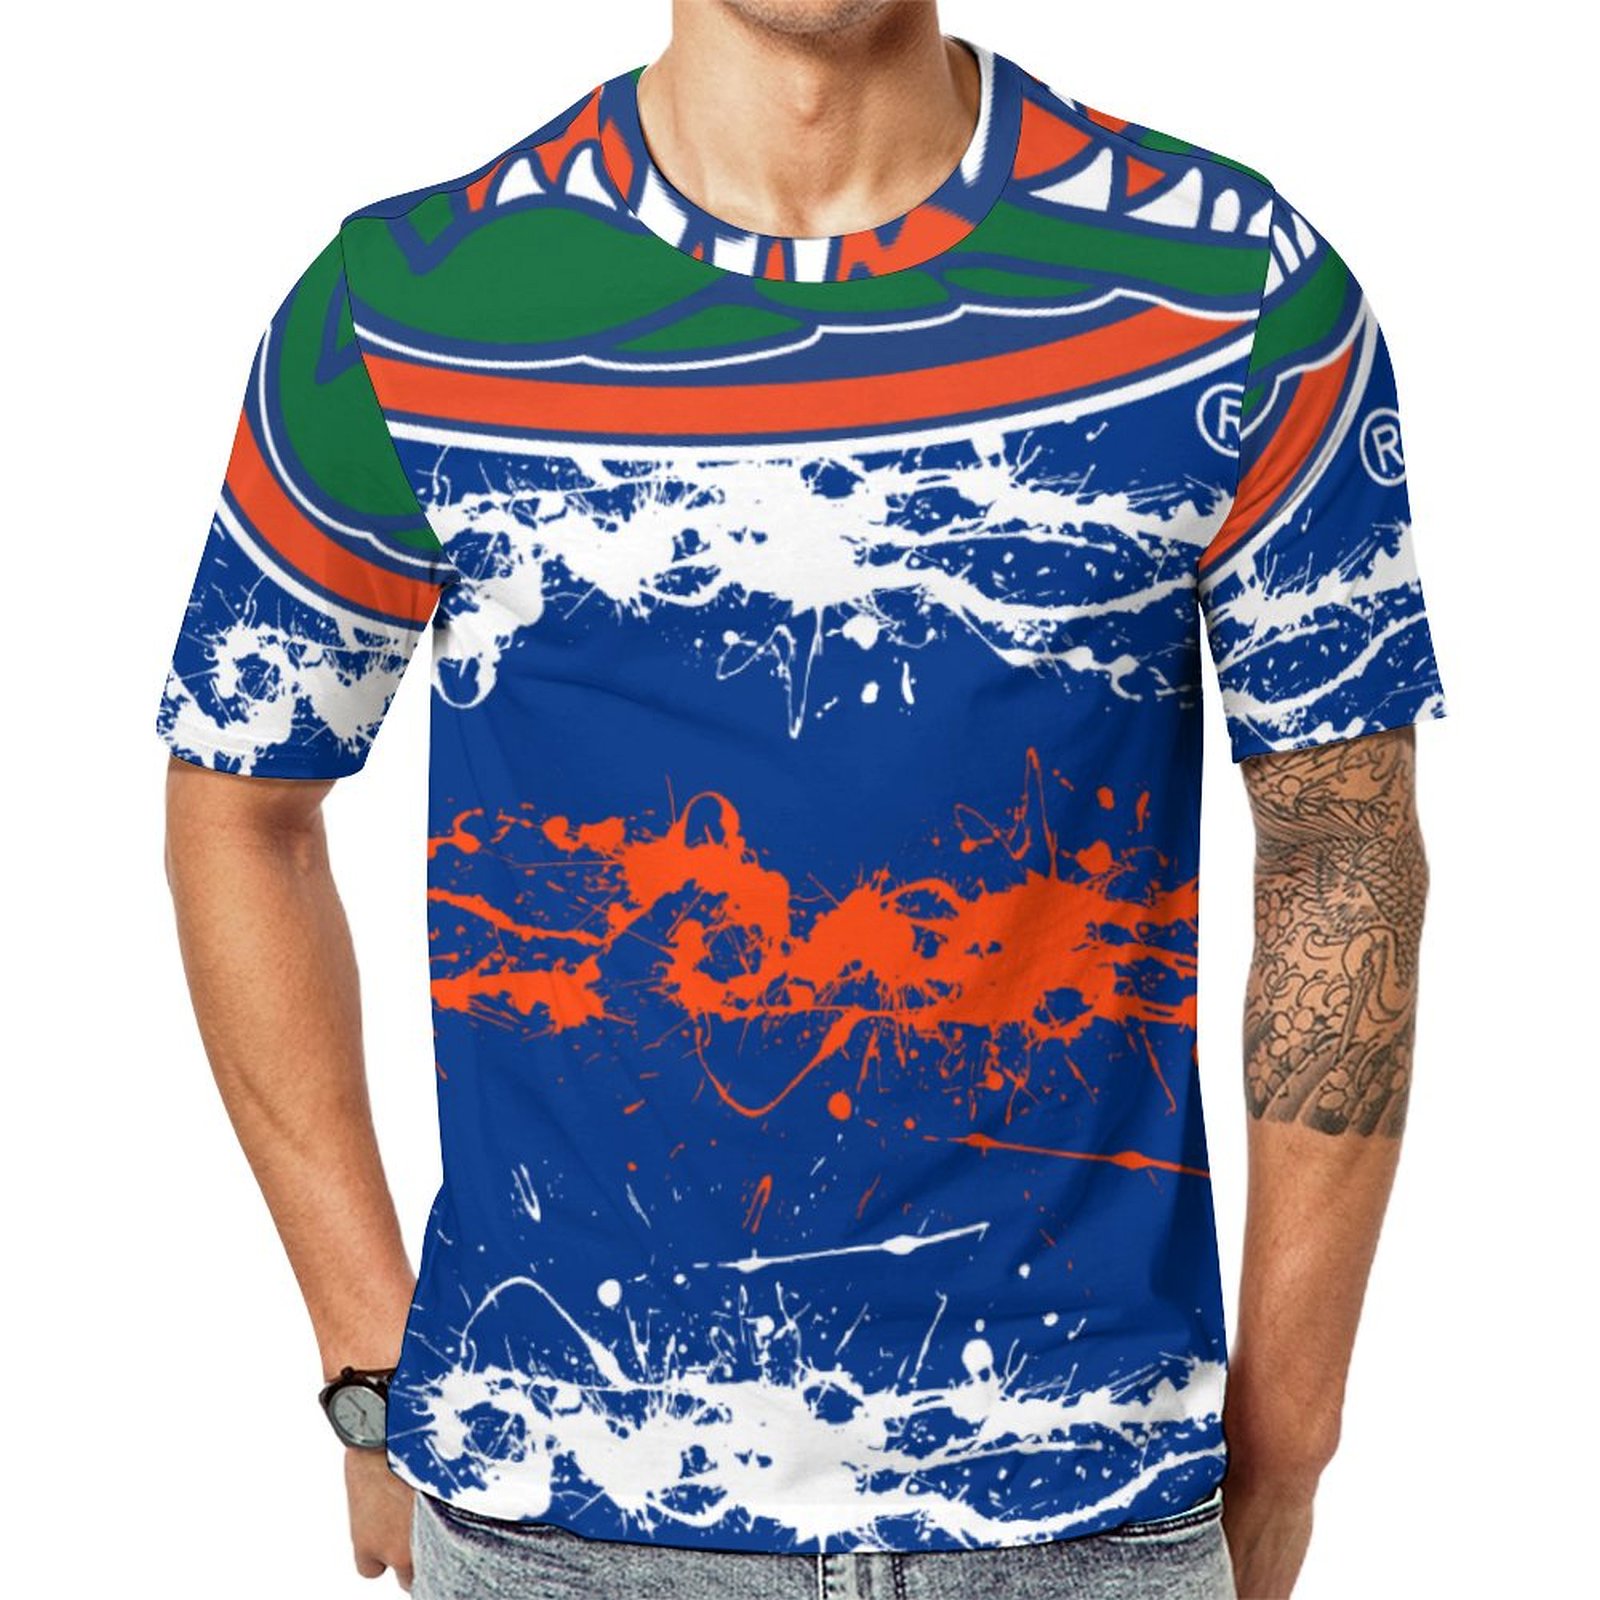 Florida Gators Paint Splash Graffiti Short Sleeve Print Unisex Tshirt Summer Casual Tees for Men and Women Coolcoshirts